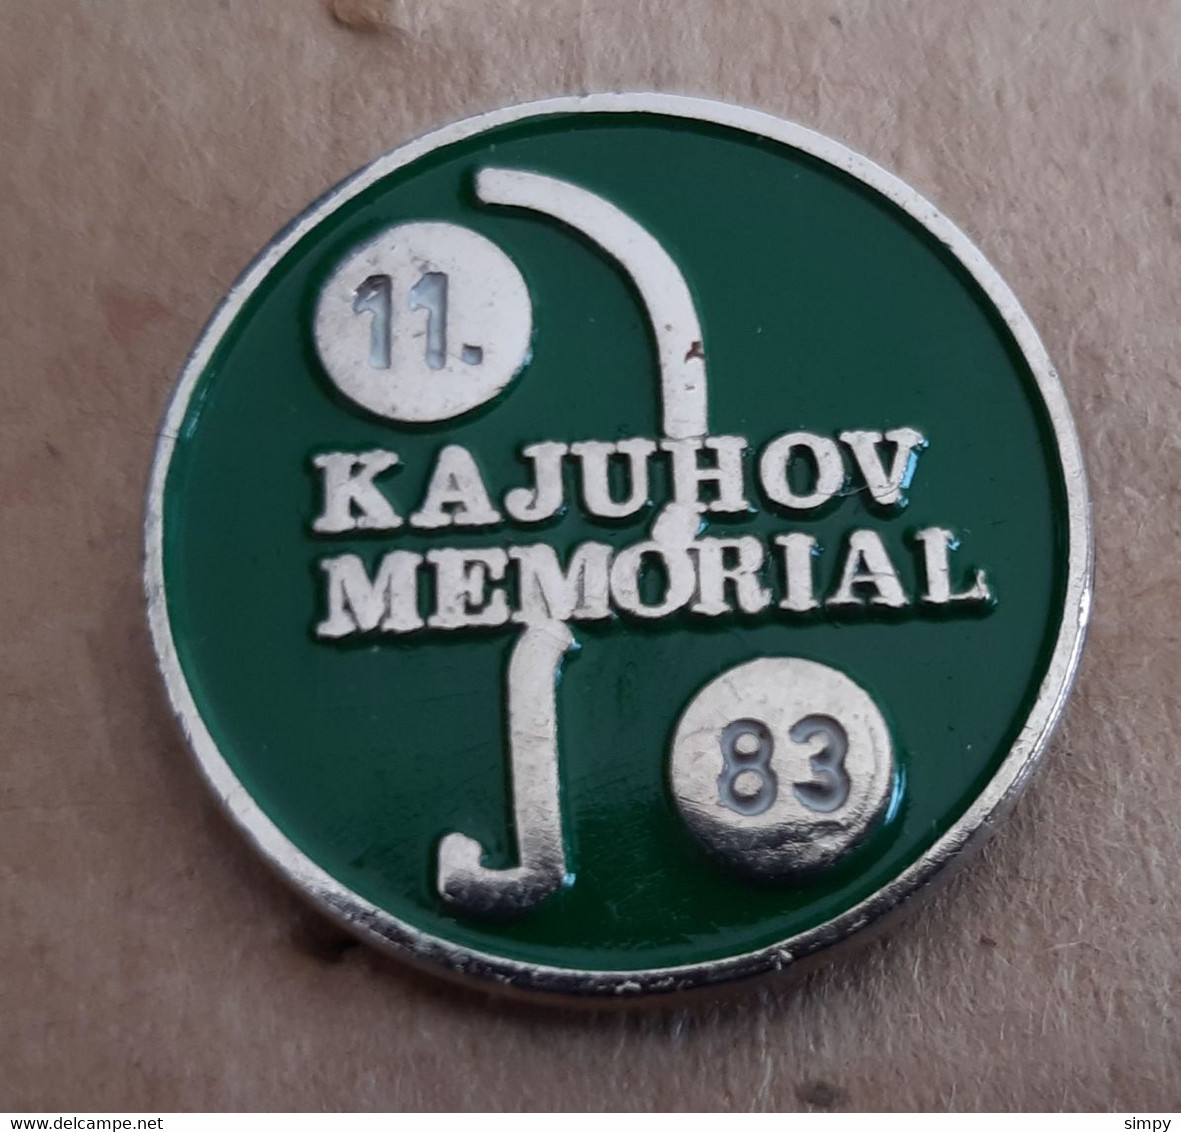 Table Tennis Tournament 11. Kajuhov Memorial  1983 Slovenia Pin Badge - Tenis De Mesa